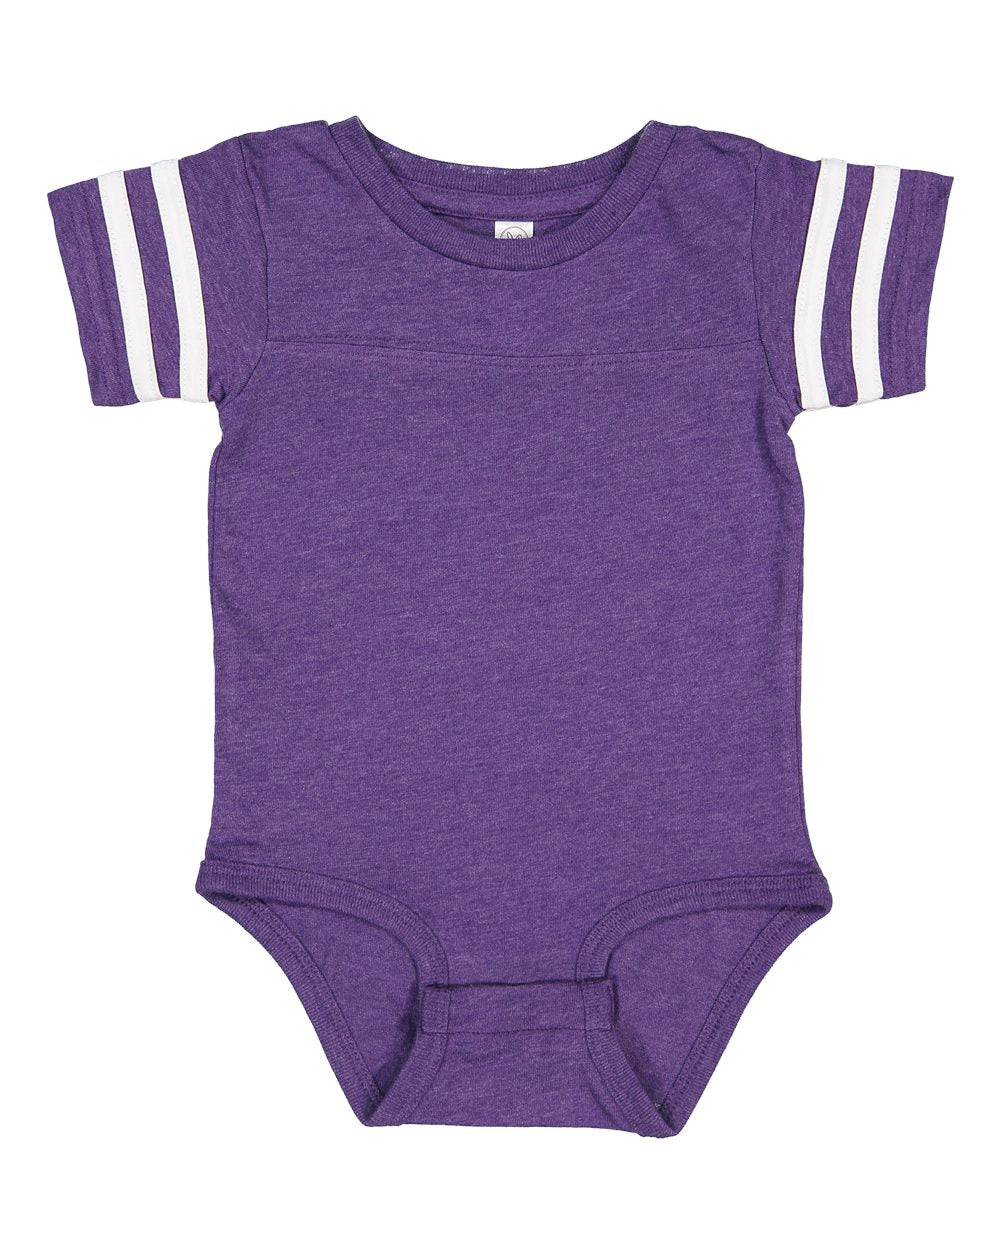 rabbit skins infant football jersey bodysuit vintage purple white